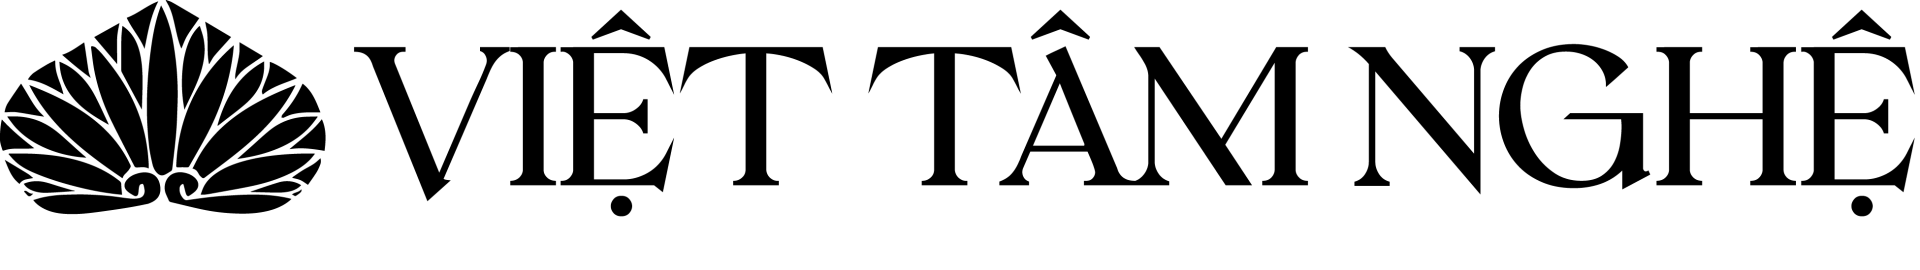 logo vtn